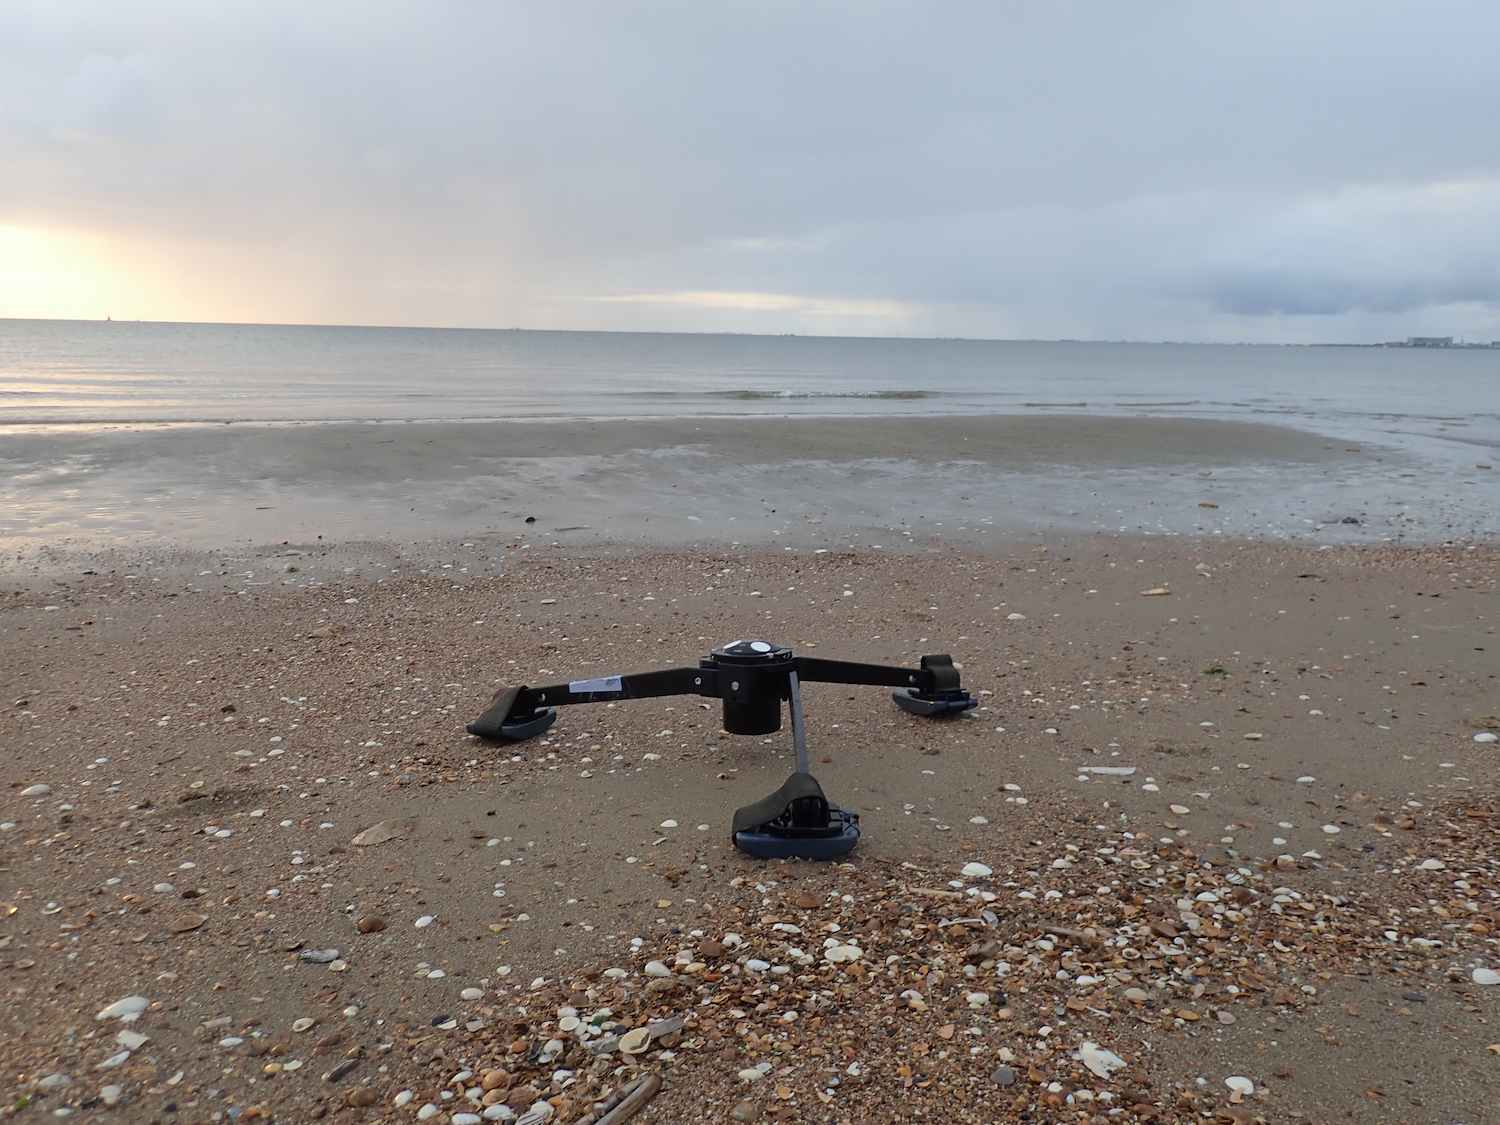 Nortek instrument on the beach